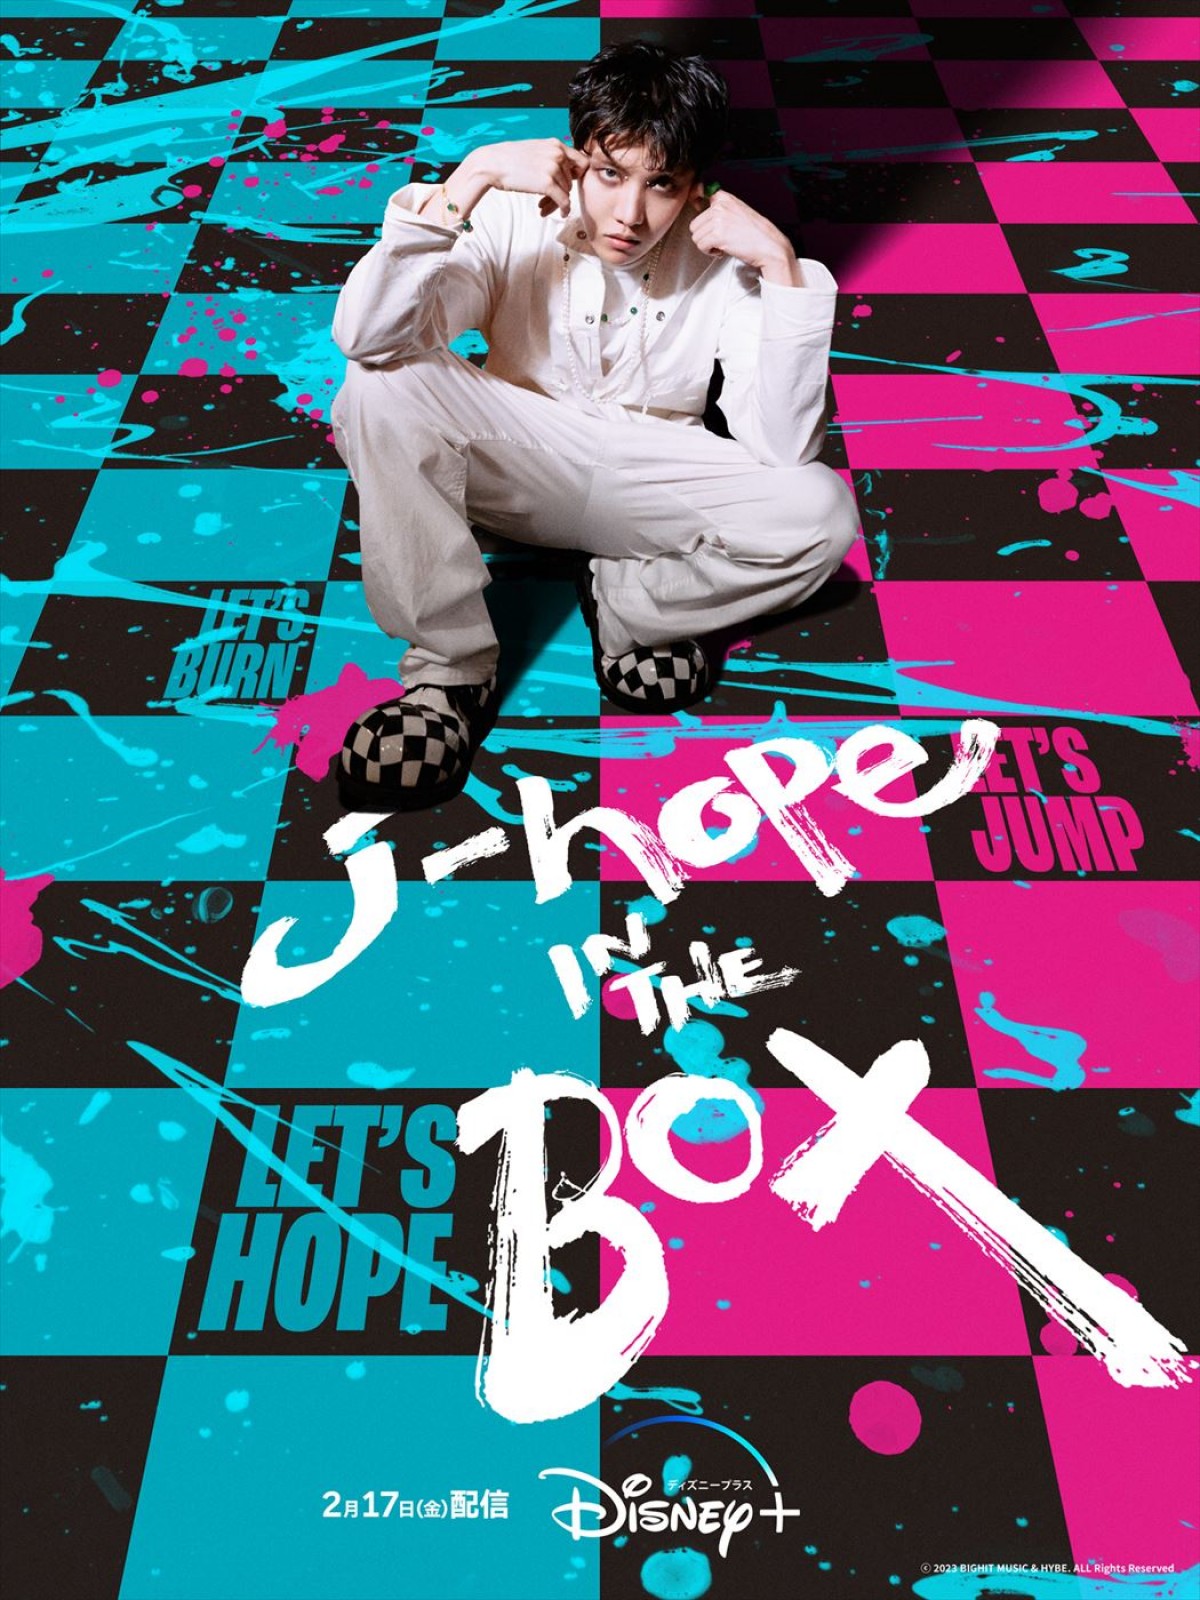 BTS・J-HOPEのソロプロジェクトに密着した『j-hope IN THE BOX』、日本語版ポスター解禁